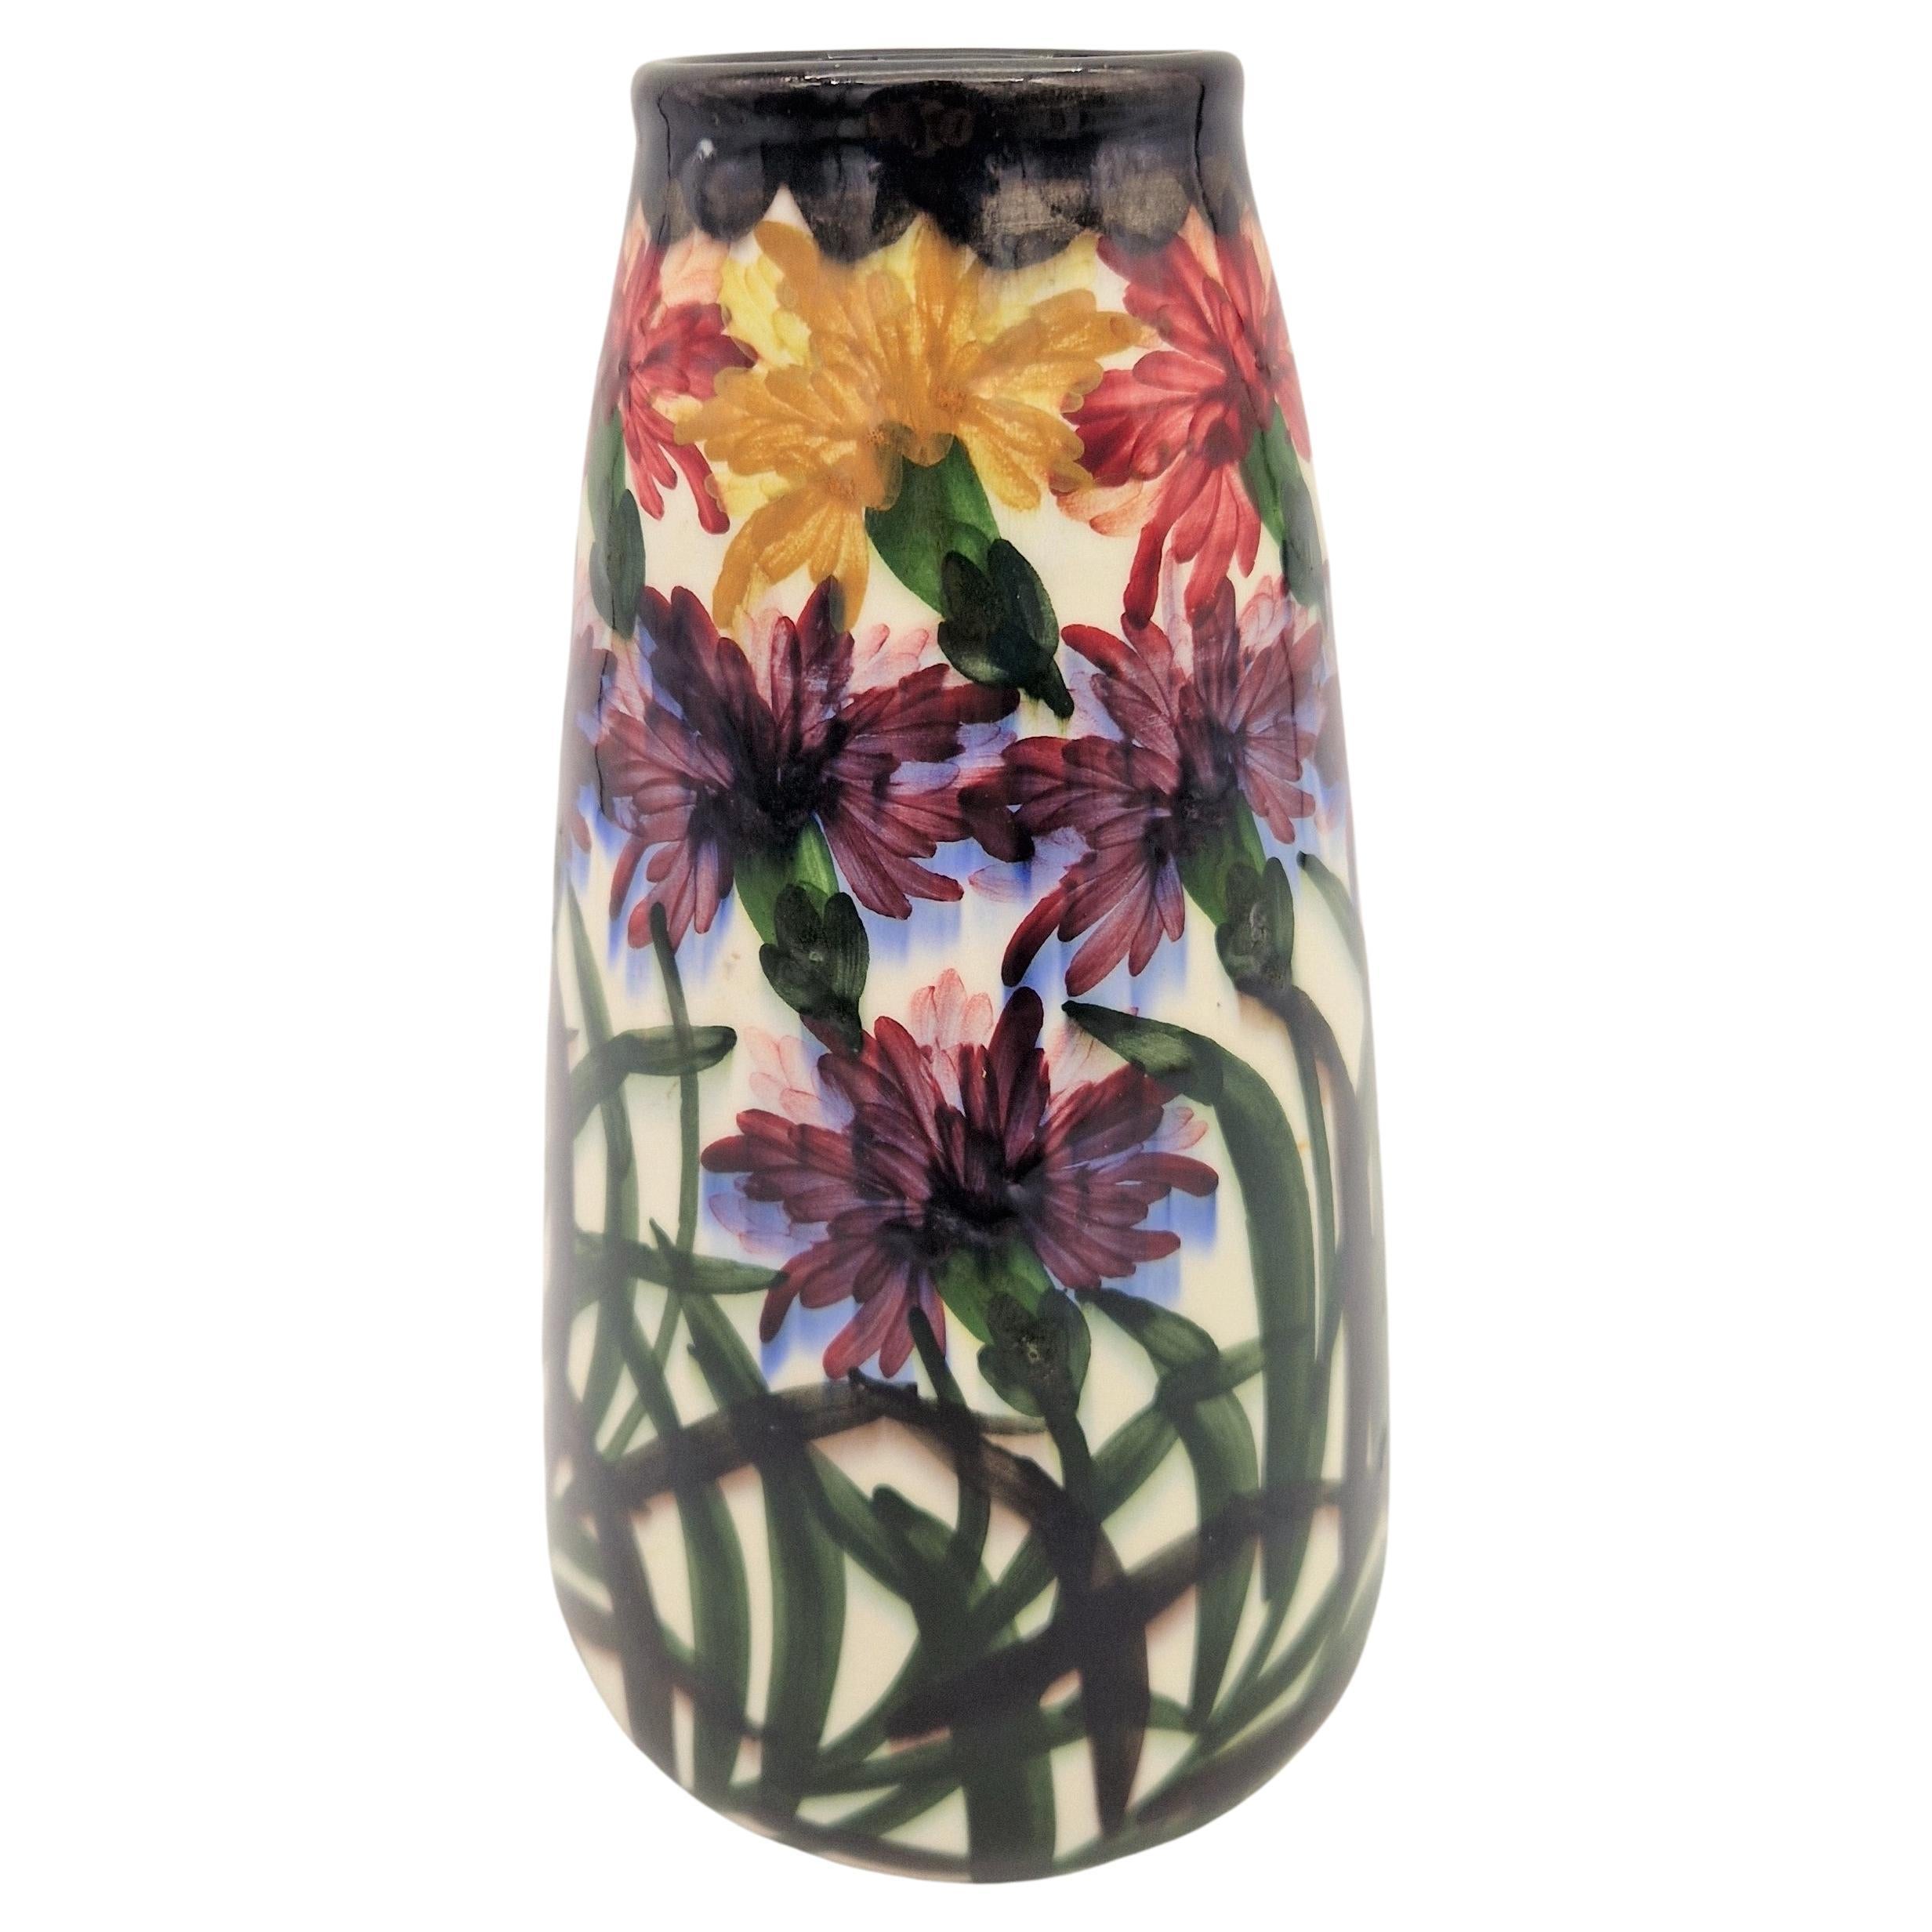 Vase en céramique Art nouveau de Schramberg, 1900 - 1920 en vente